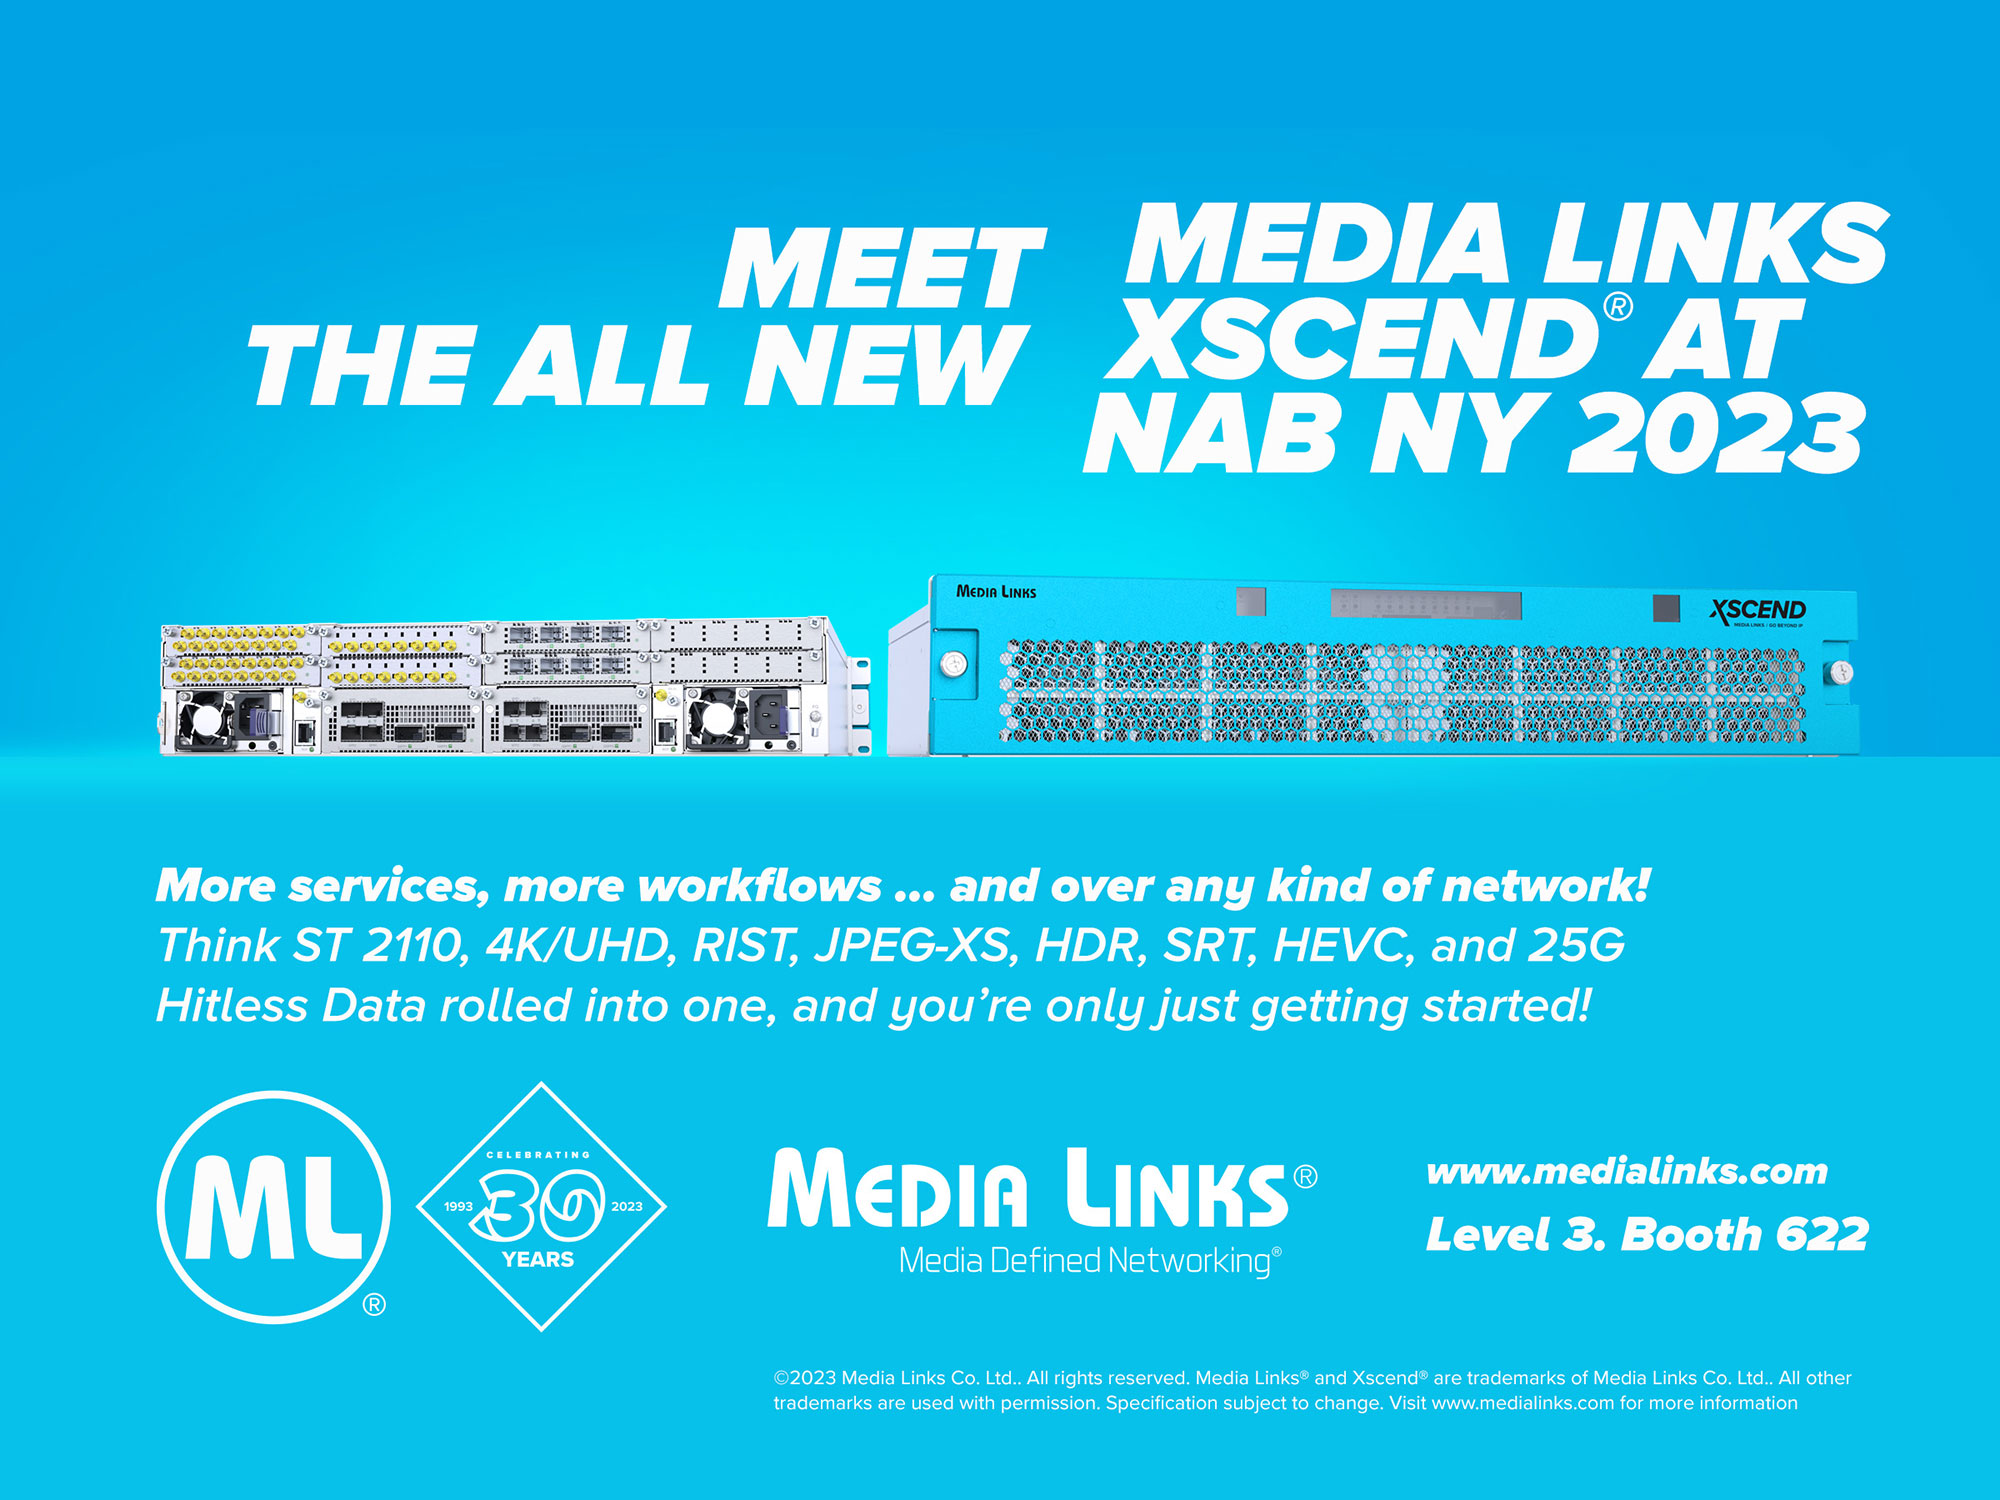 Xscend® IP Media Platform to Be Showcased at NAB NY 2023